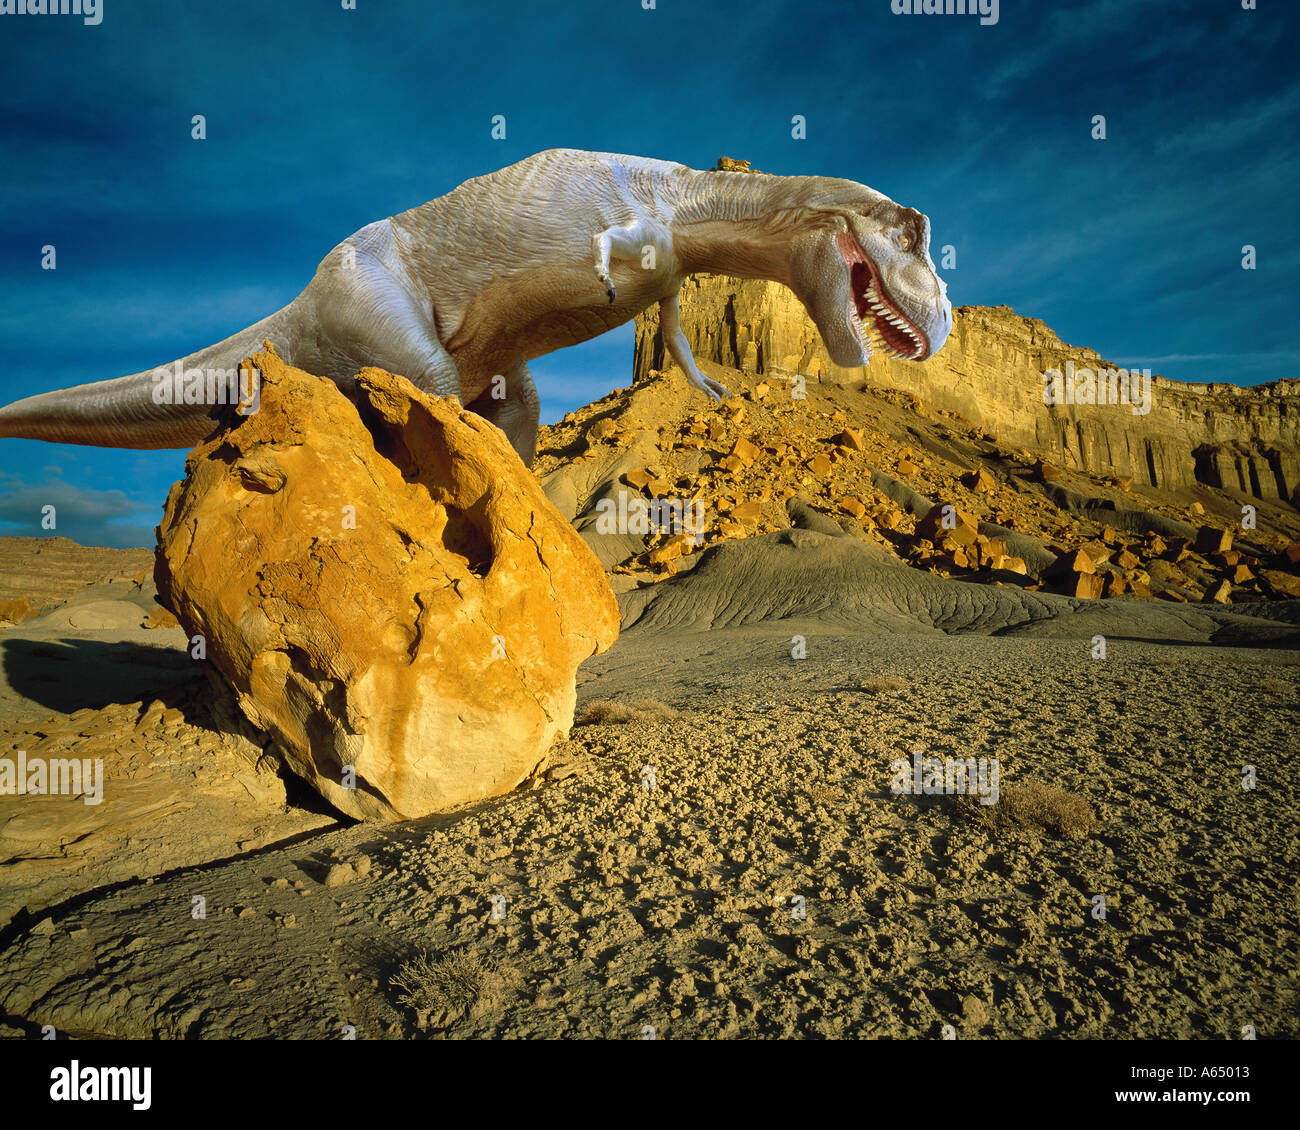 Tyranosaurus rex model placed into a desert landscape Stock Photo